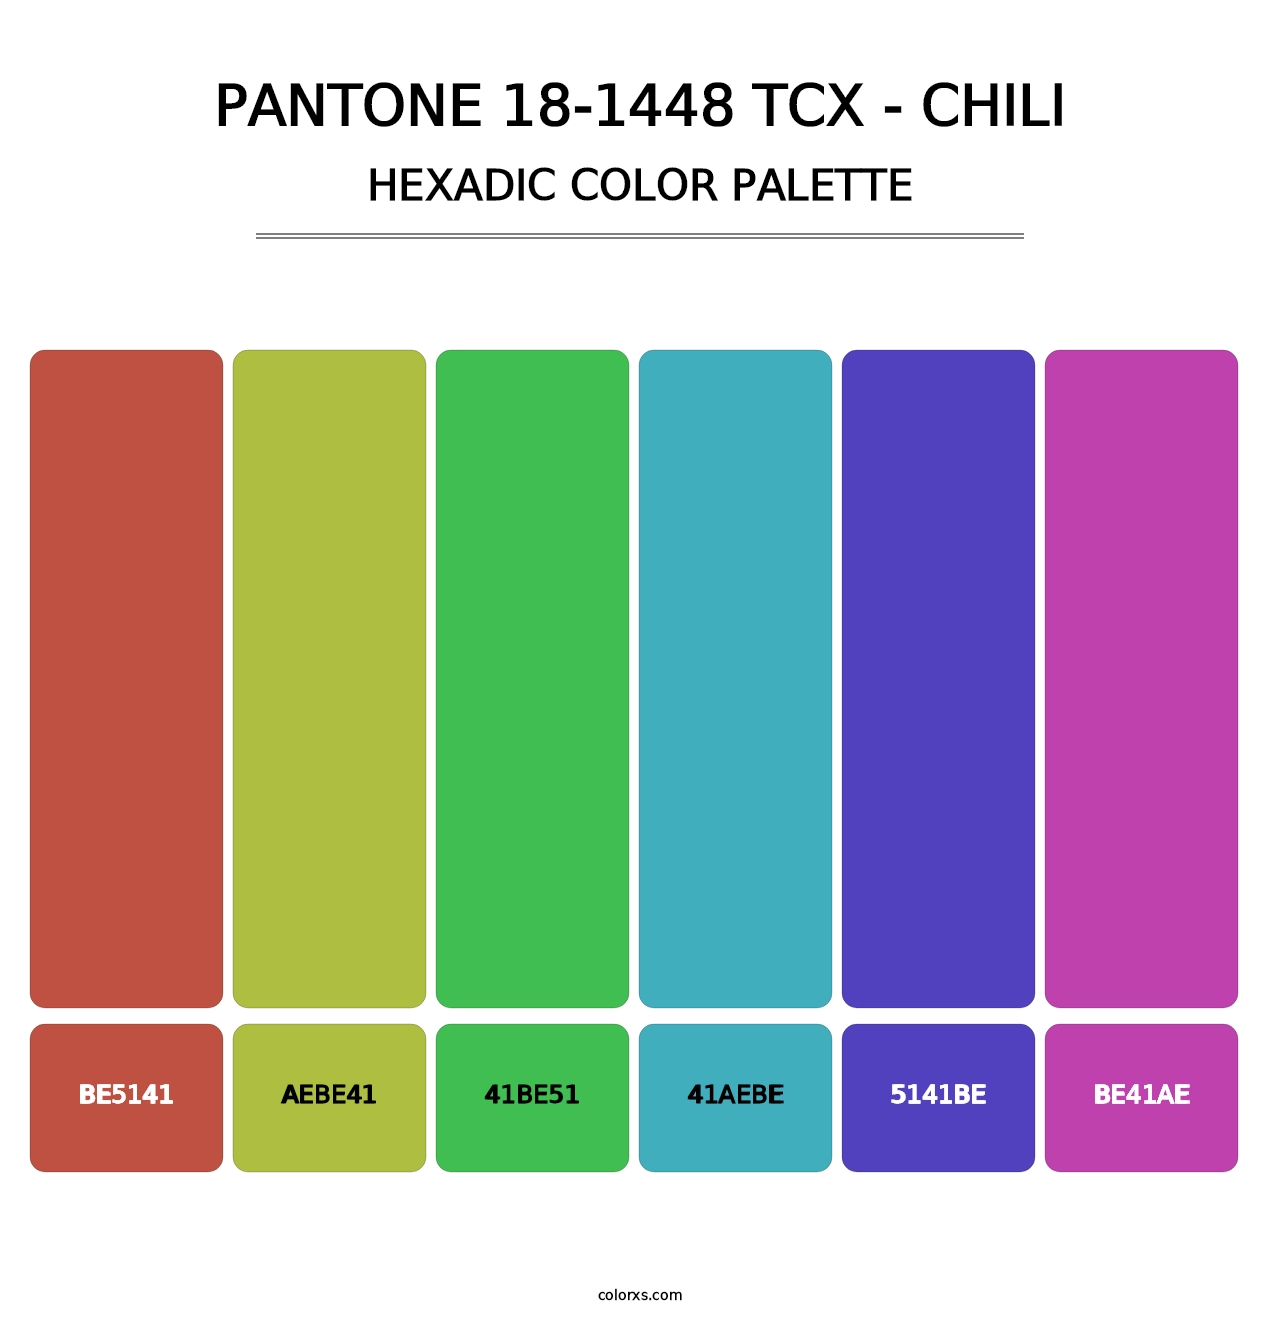 PANTONE 18-1448 TCX - Chili - Hexadic Color Palette